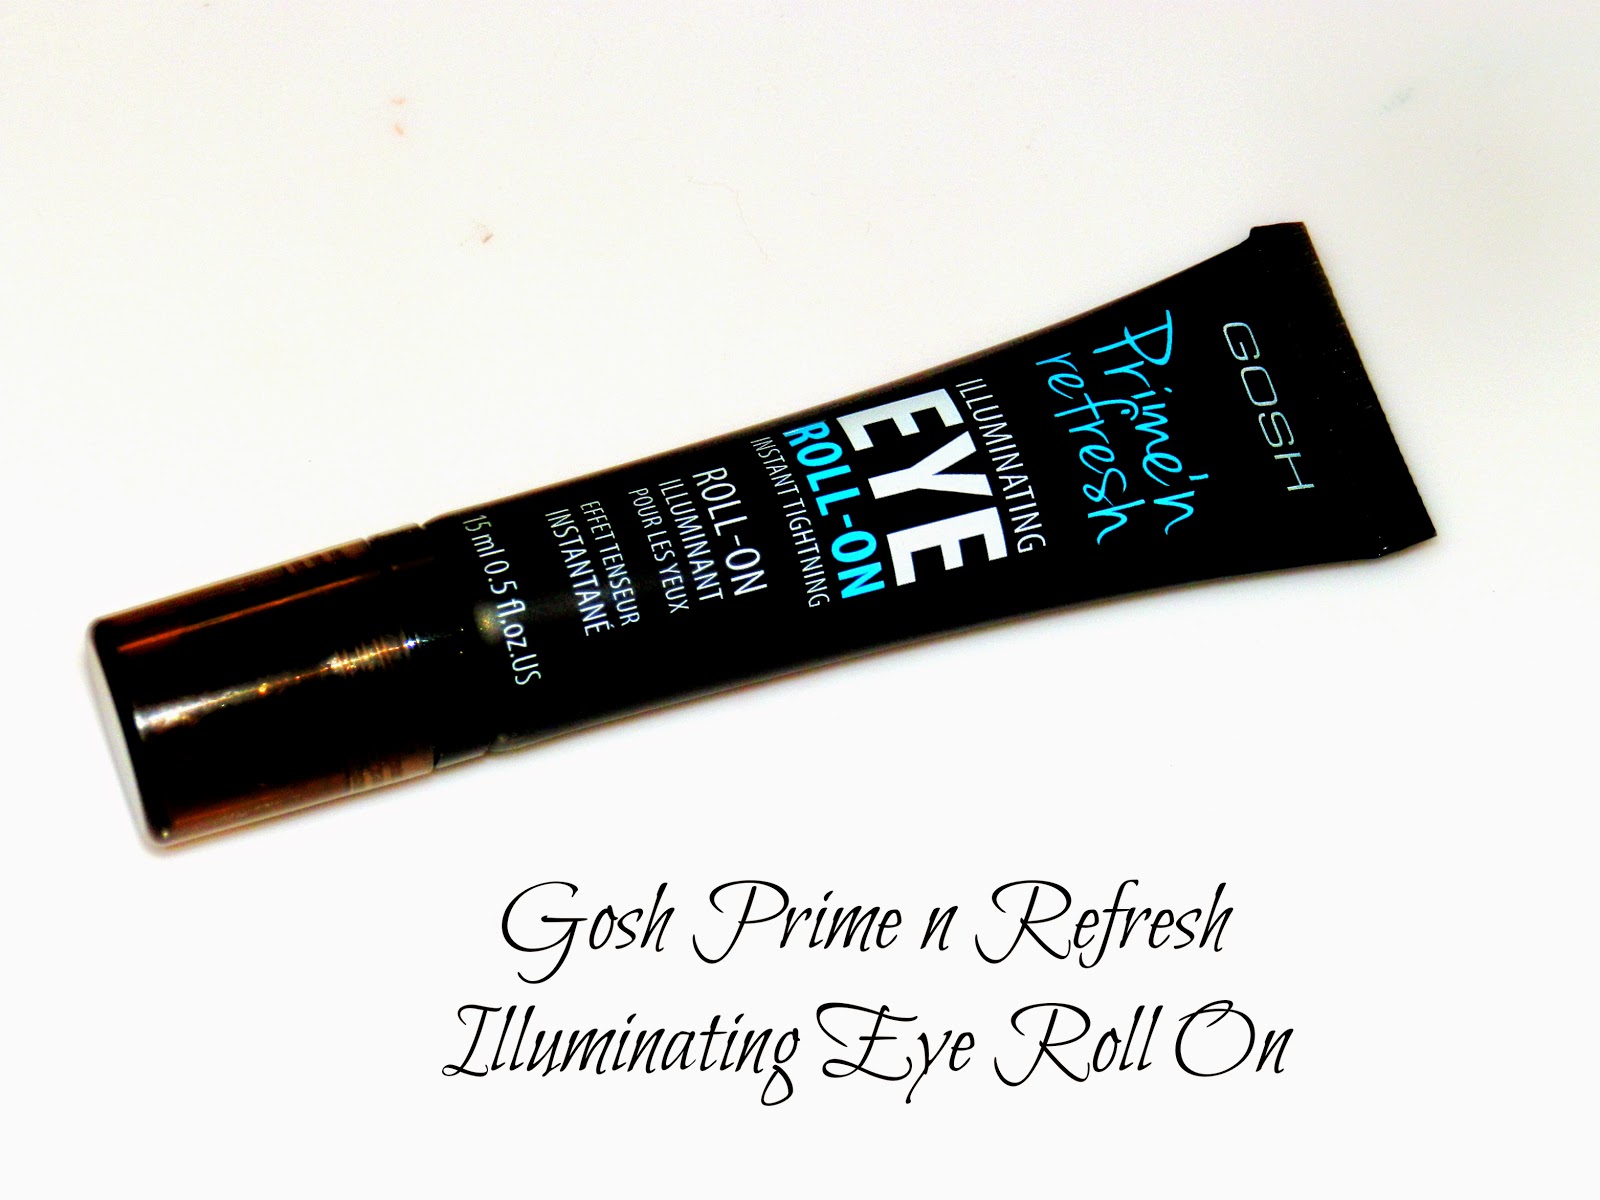 Gosh Prime n Refresh Illuminating Eye Roll On Reviews